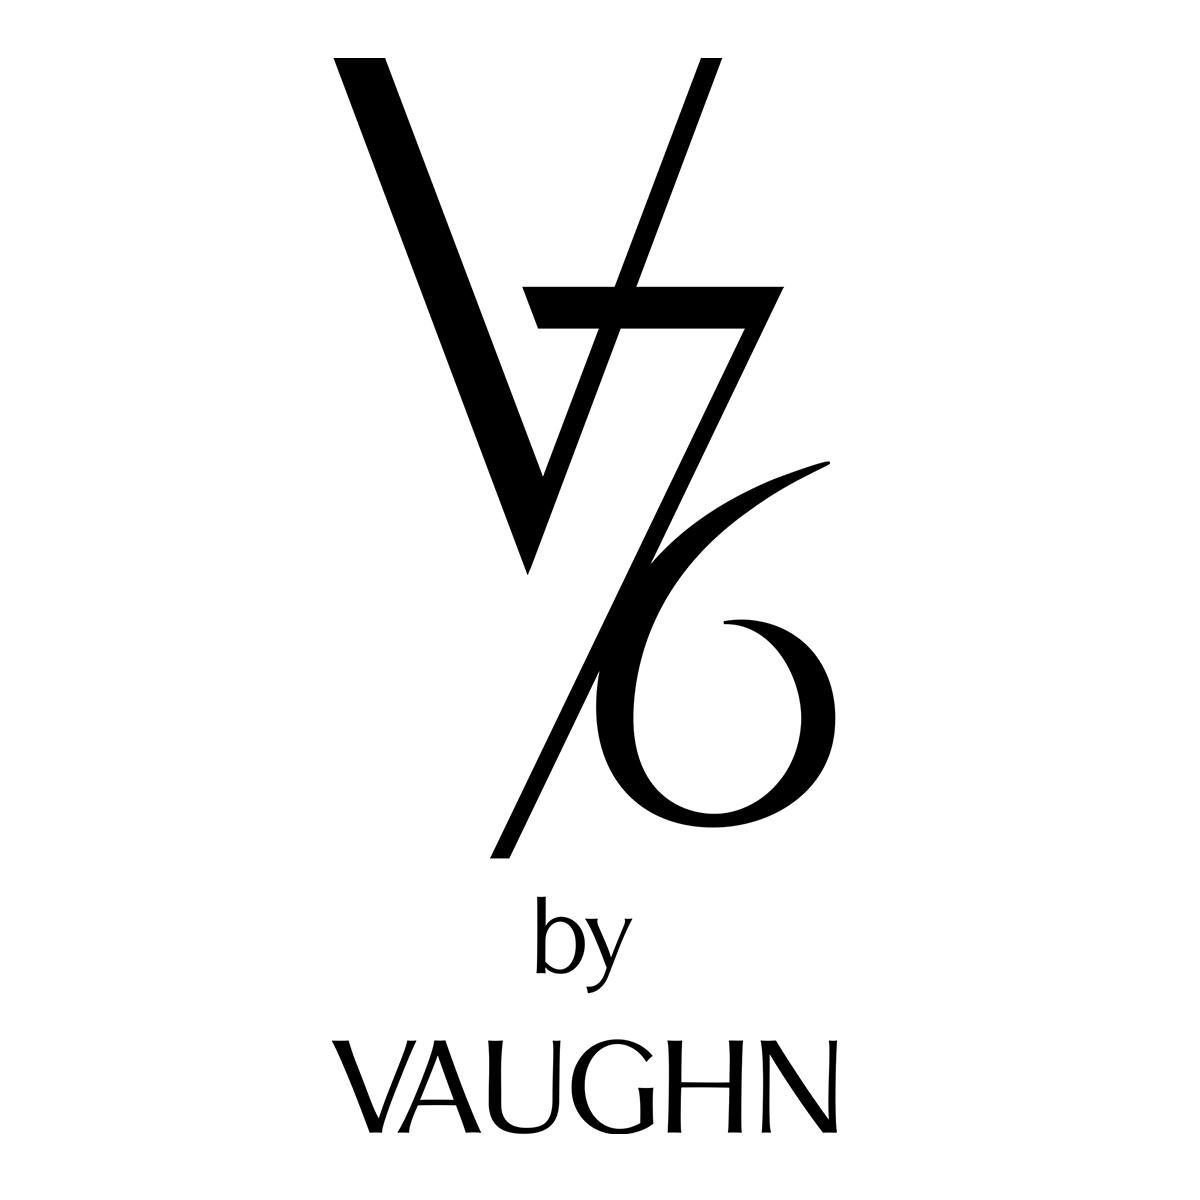 V76 by Vaughn